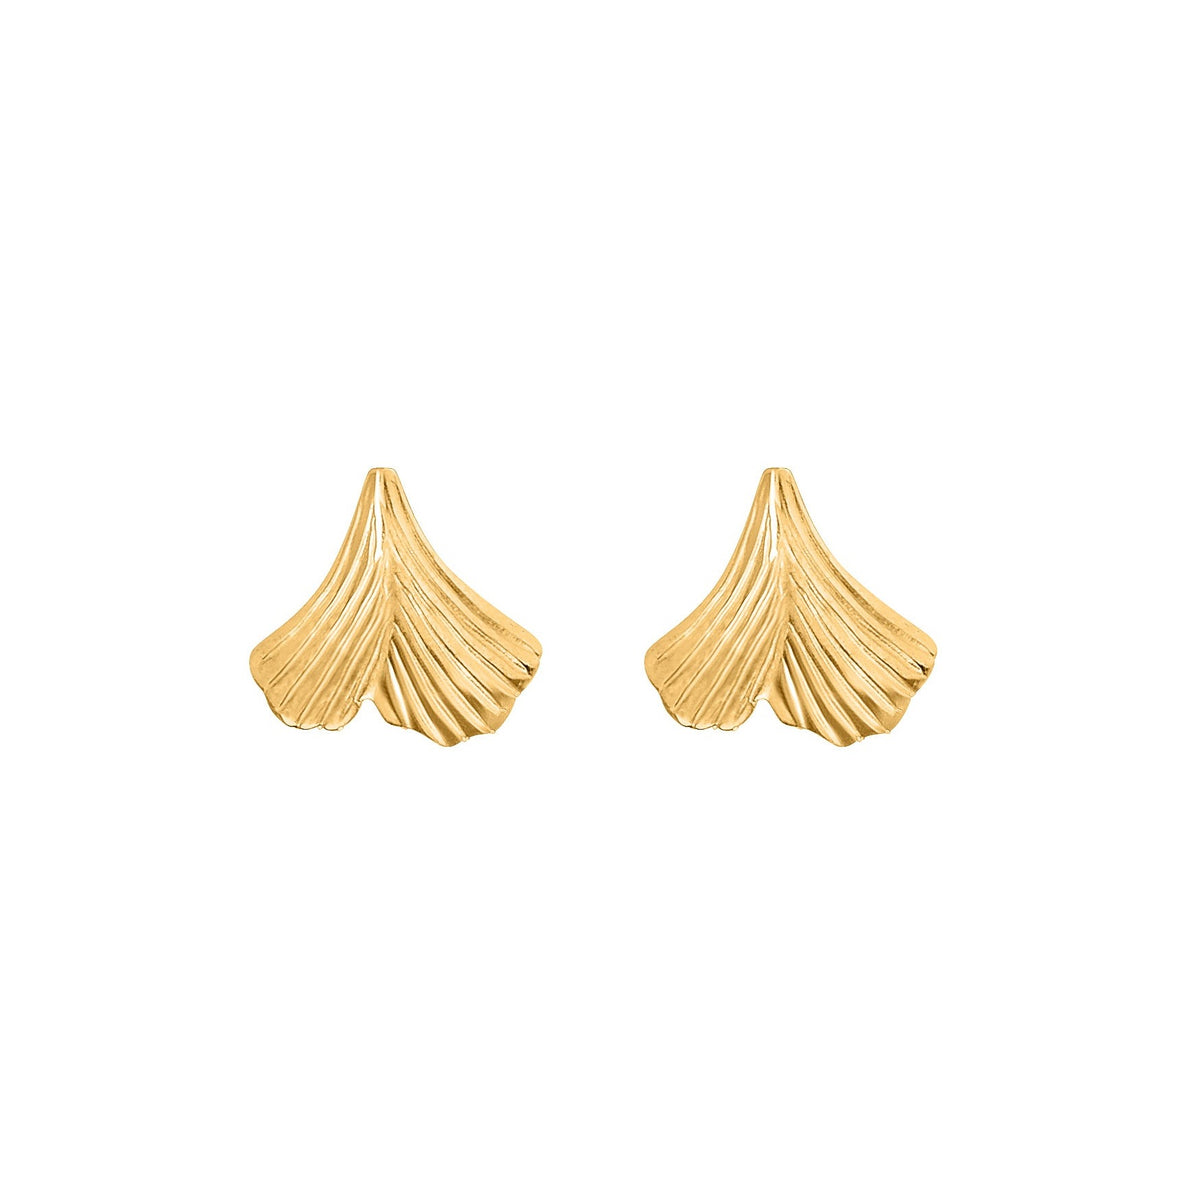 Ginkgo Leaf Earrings GOLD plated